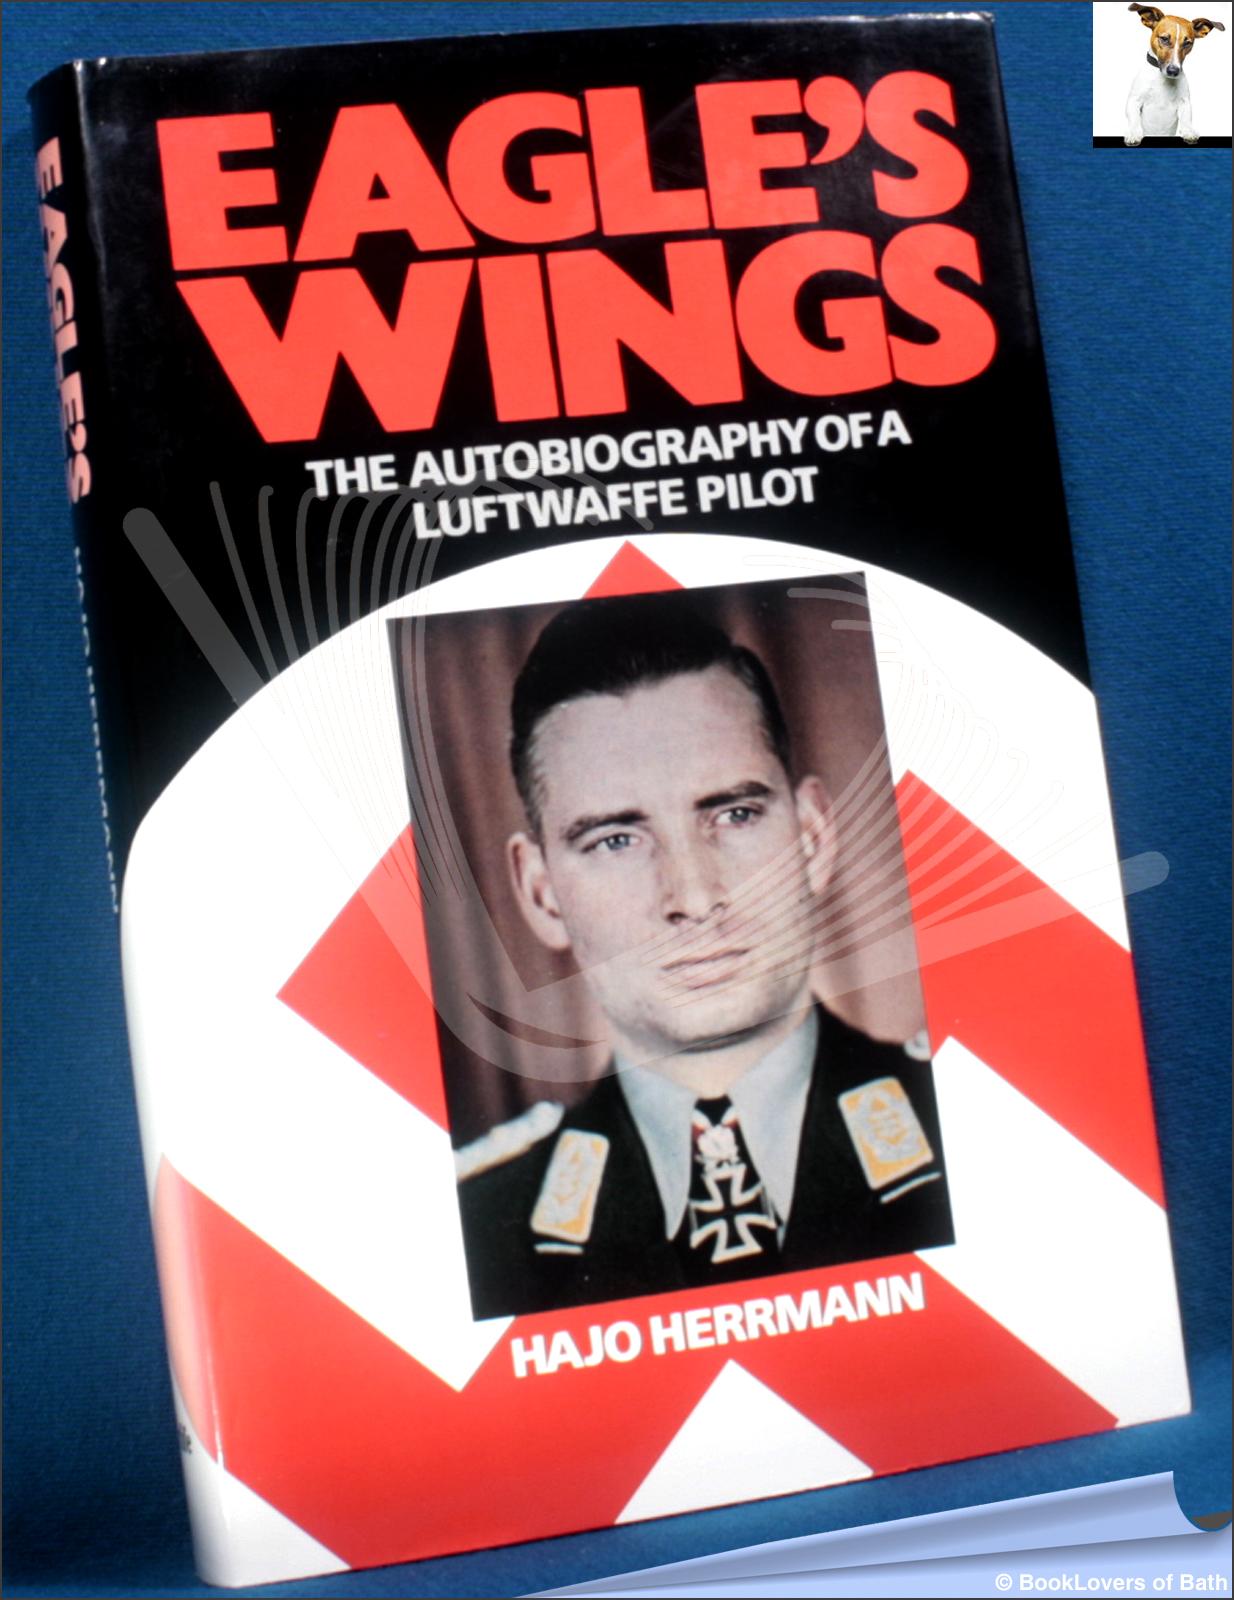 Eagle's Wings: The Autobiography of a Luftwaffe Pilot - Hajo Herrmann